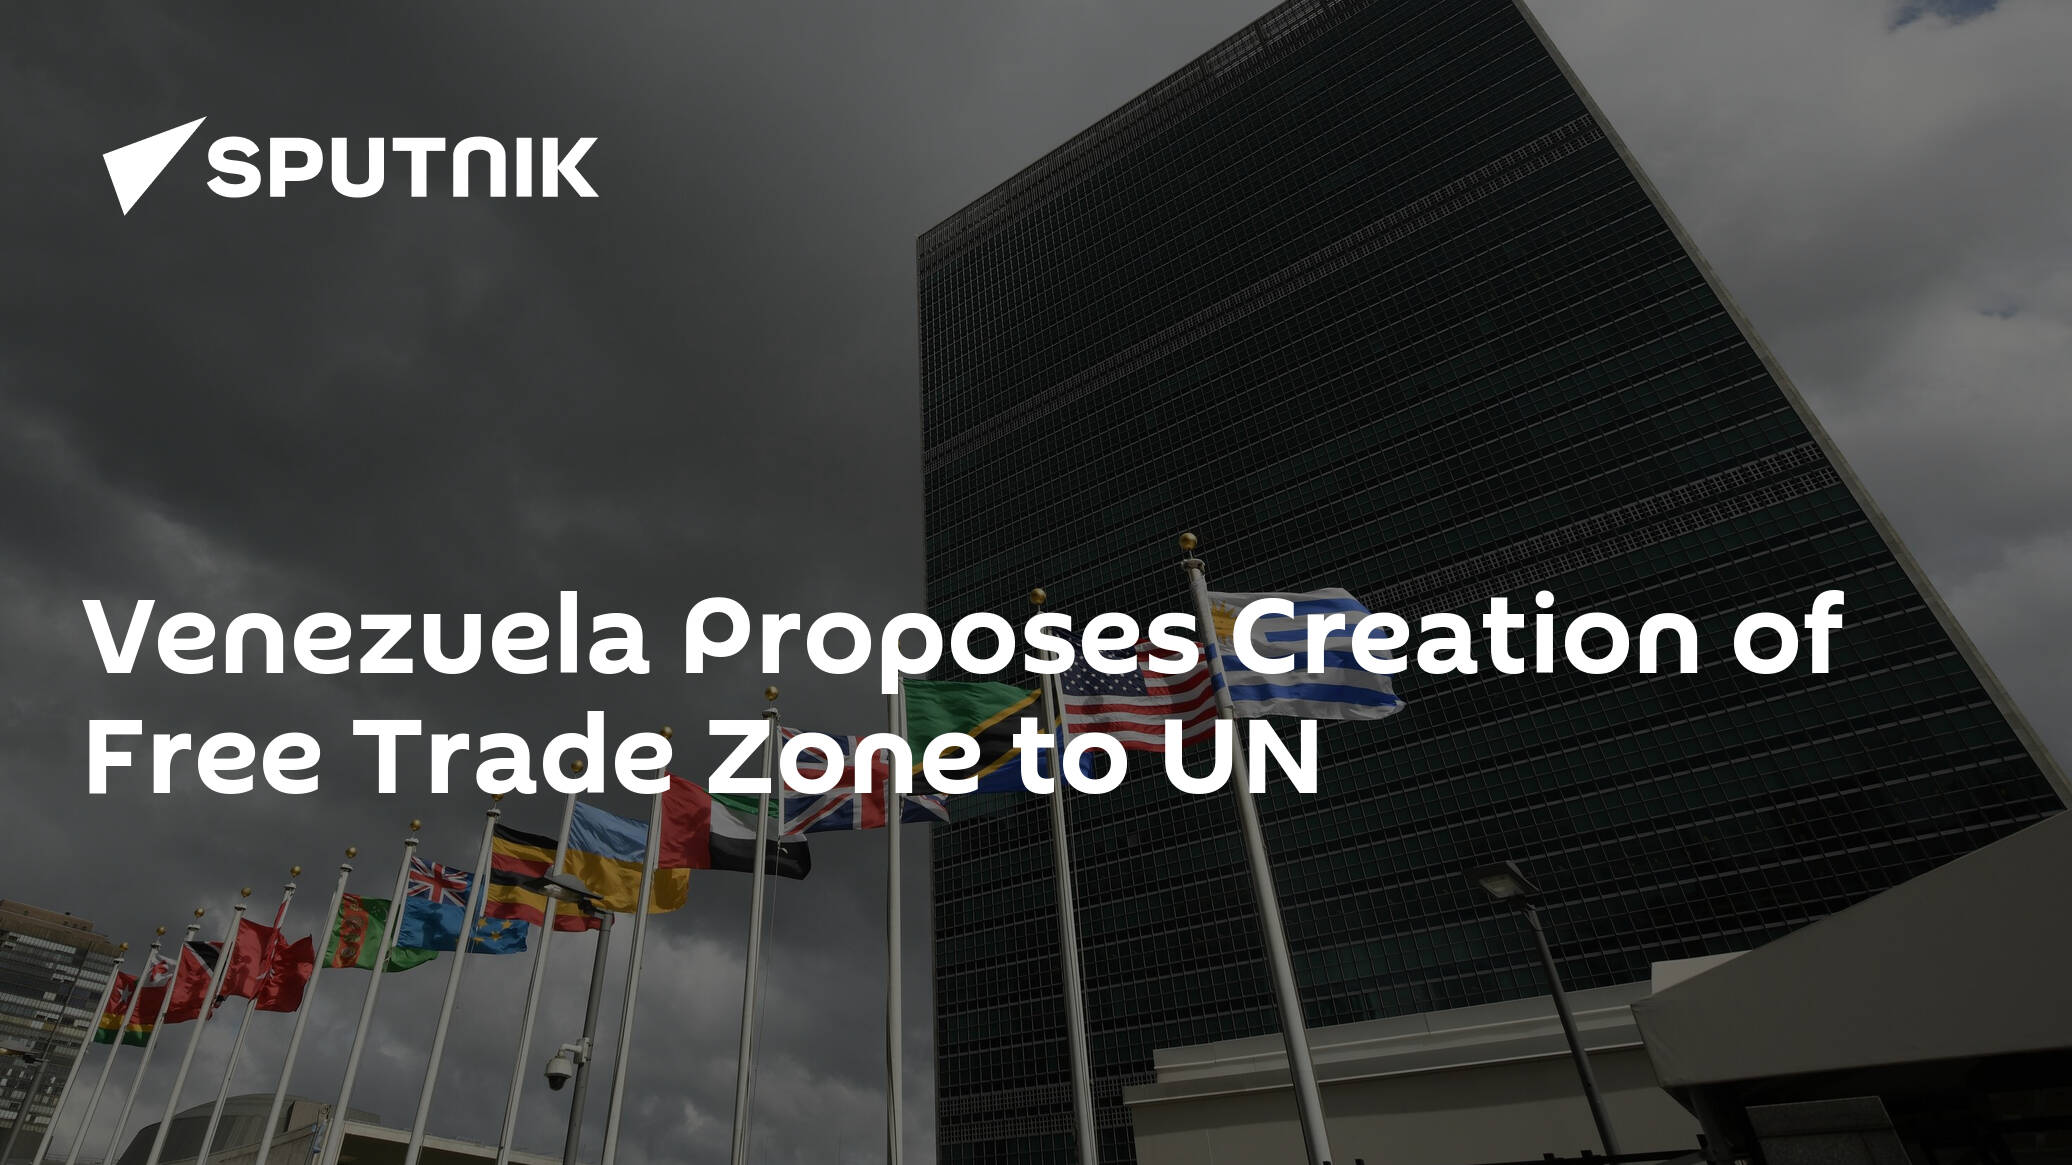 Venezuela Proposes UN to Create Sanctions-Free Zone